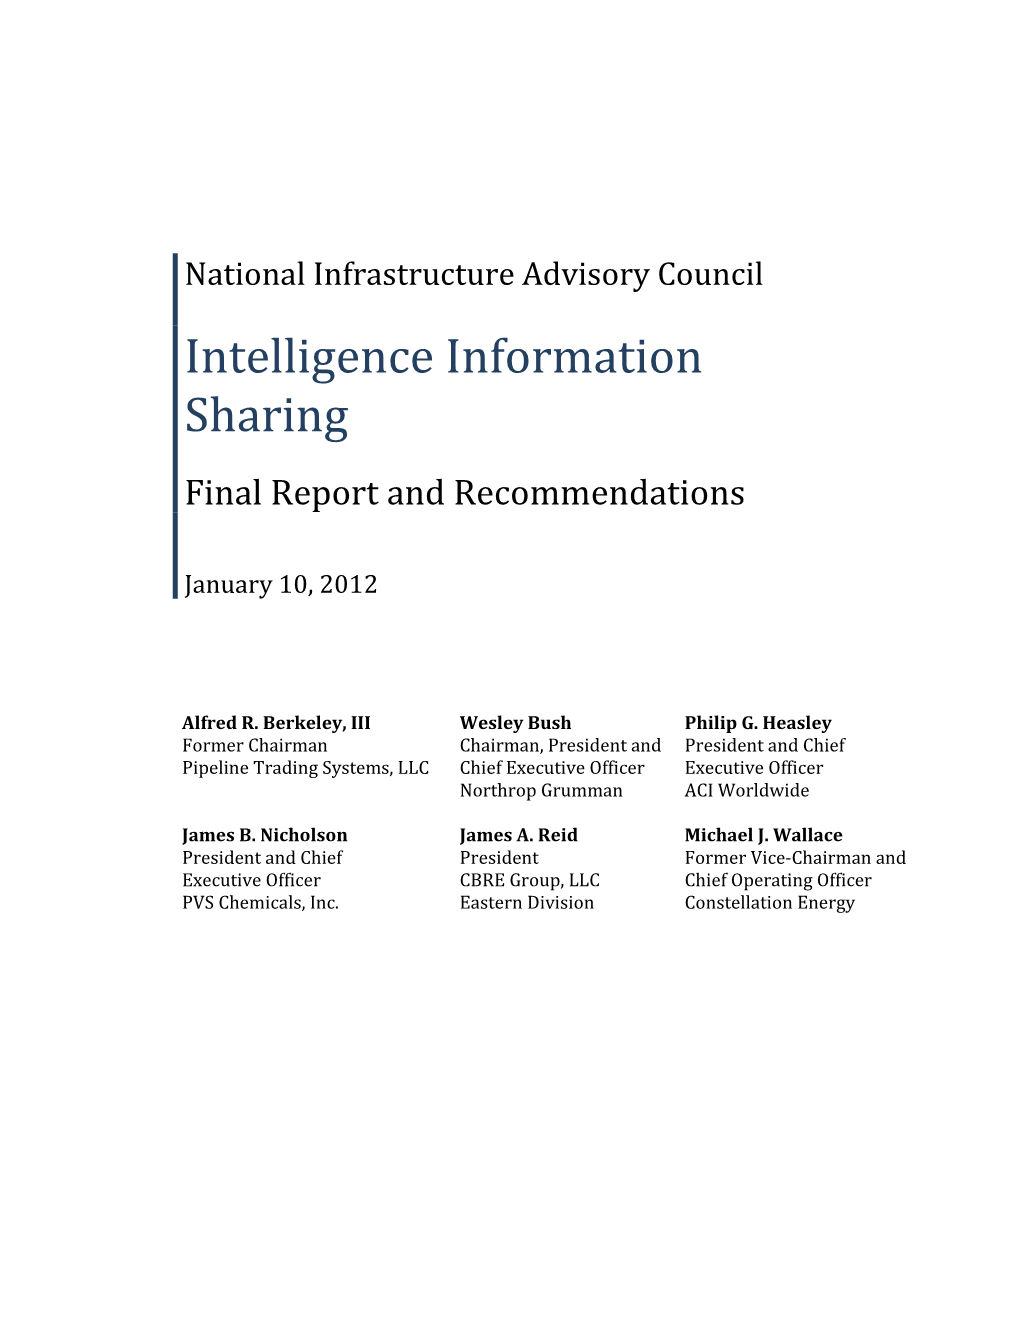 NIAC Intelligence Information Sharing Study